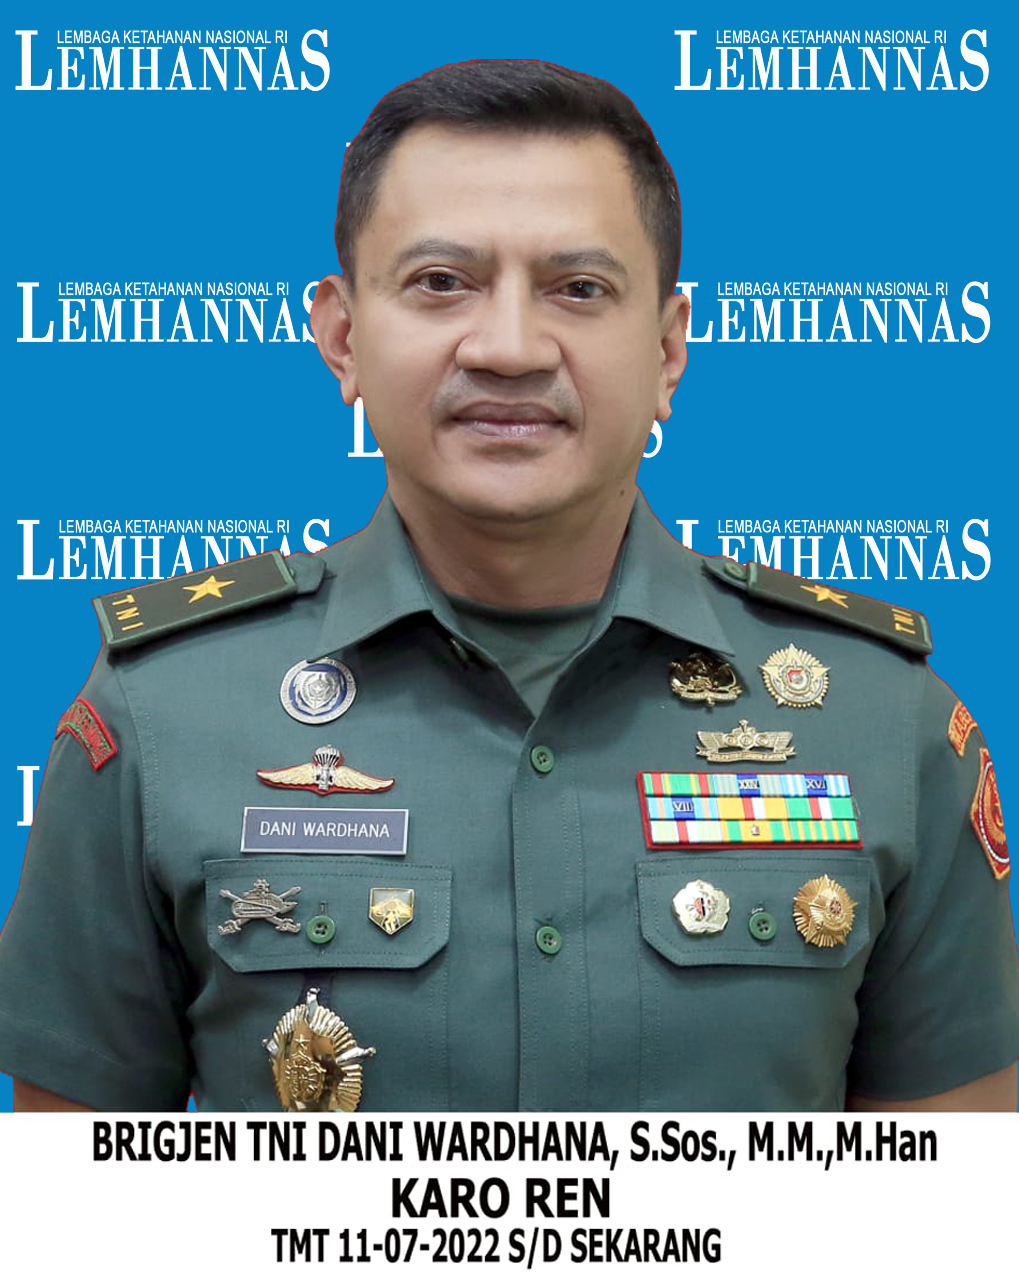 Brigjen TNI Muhamad Rusli, S.H., S.I.P., M.M.